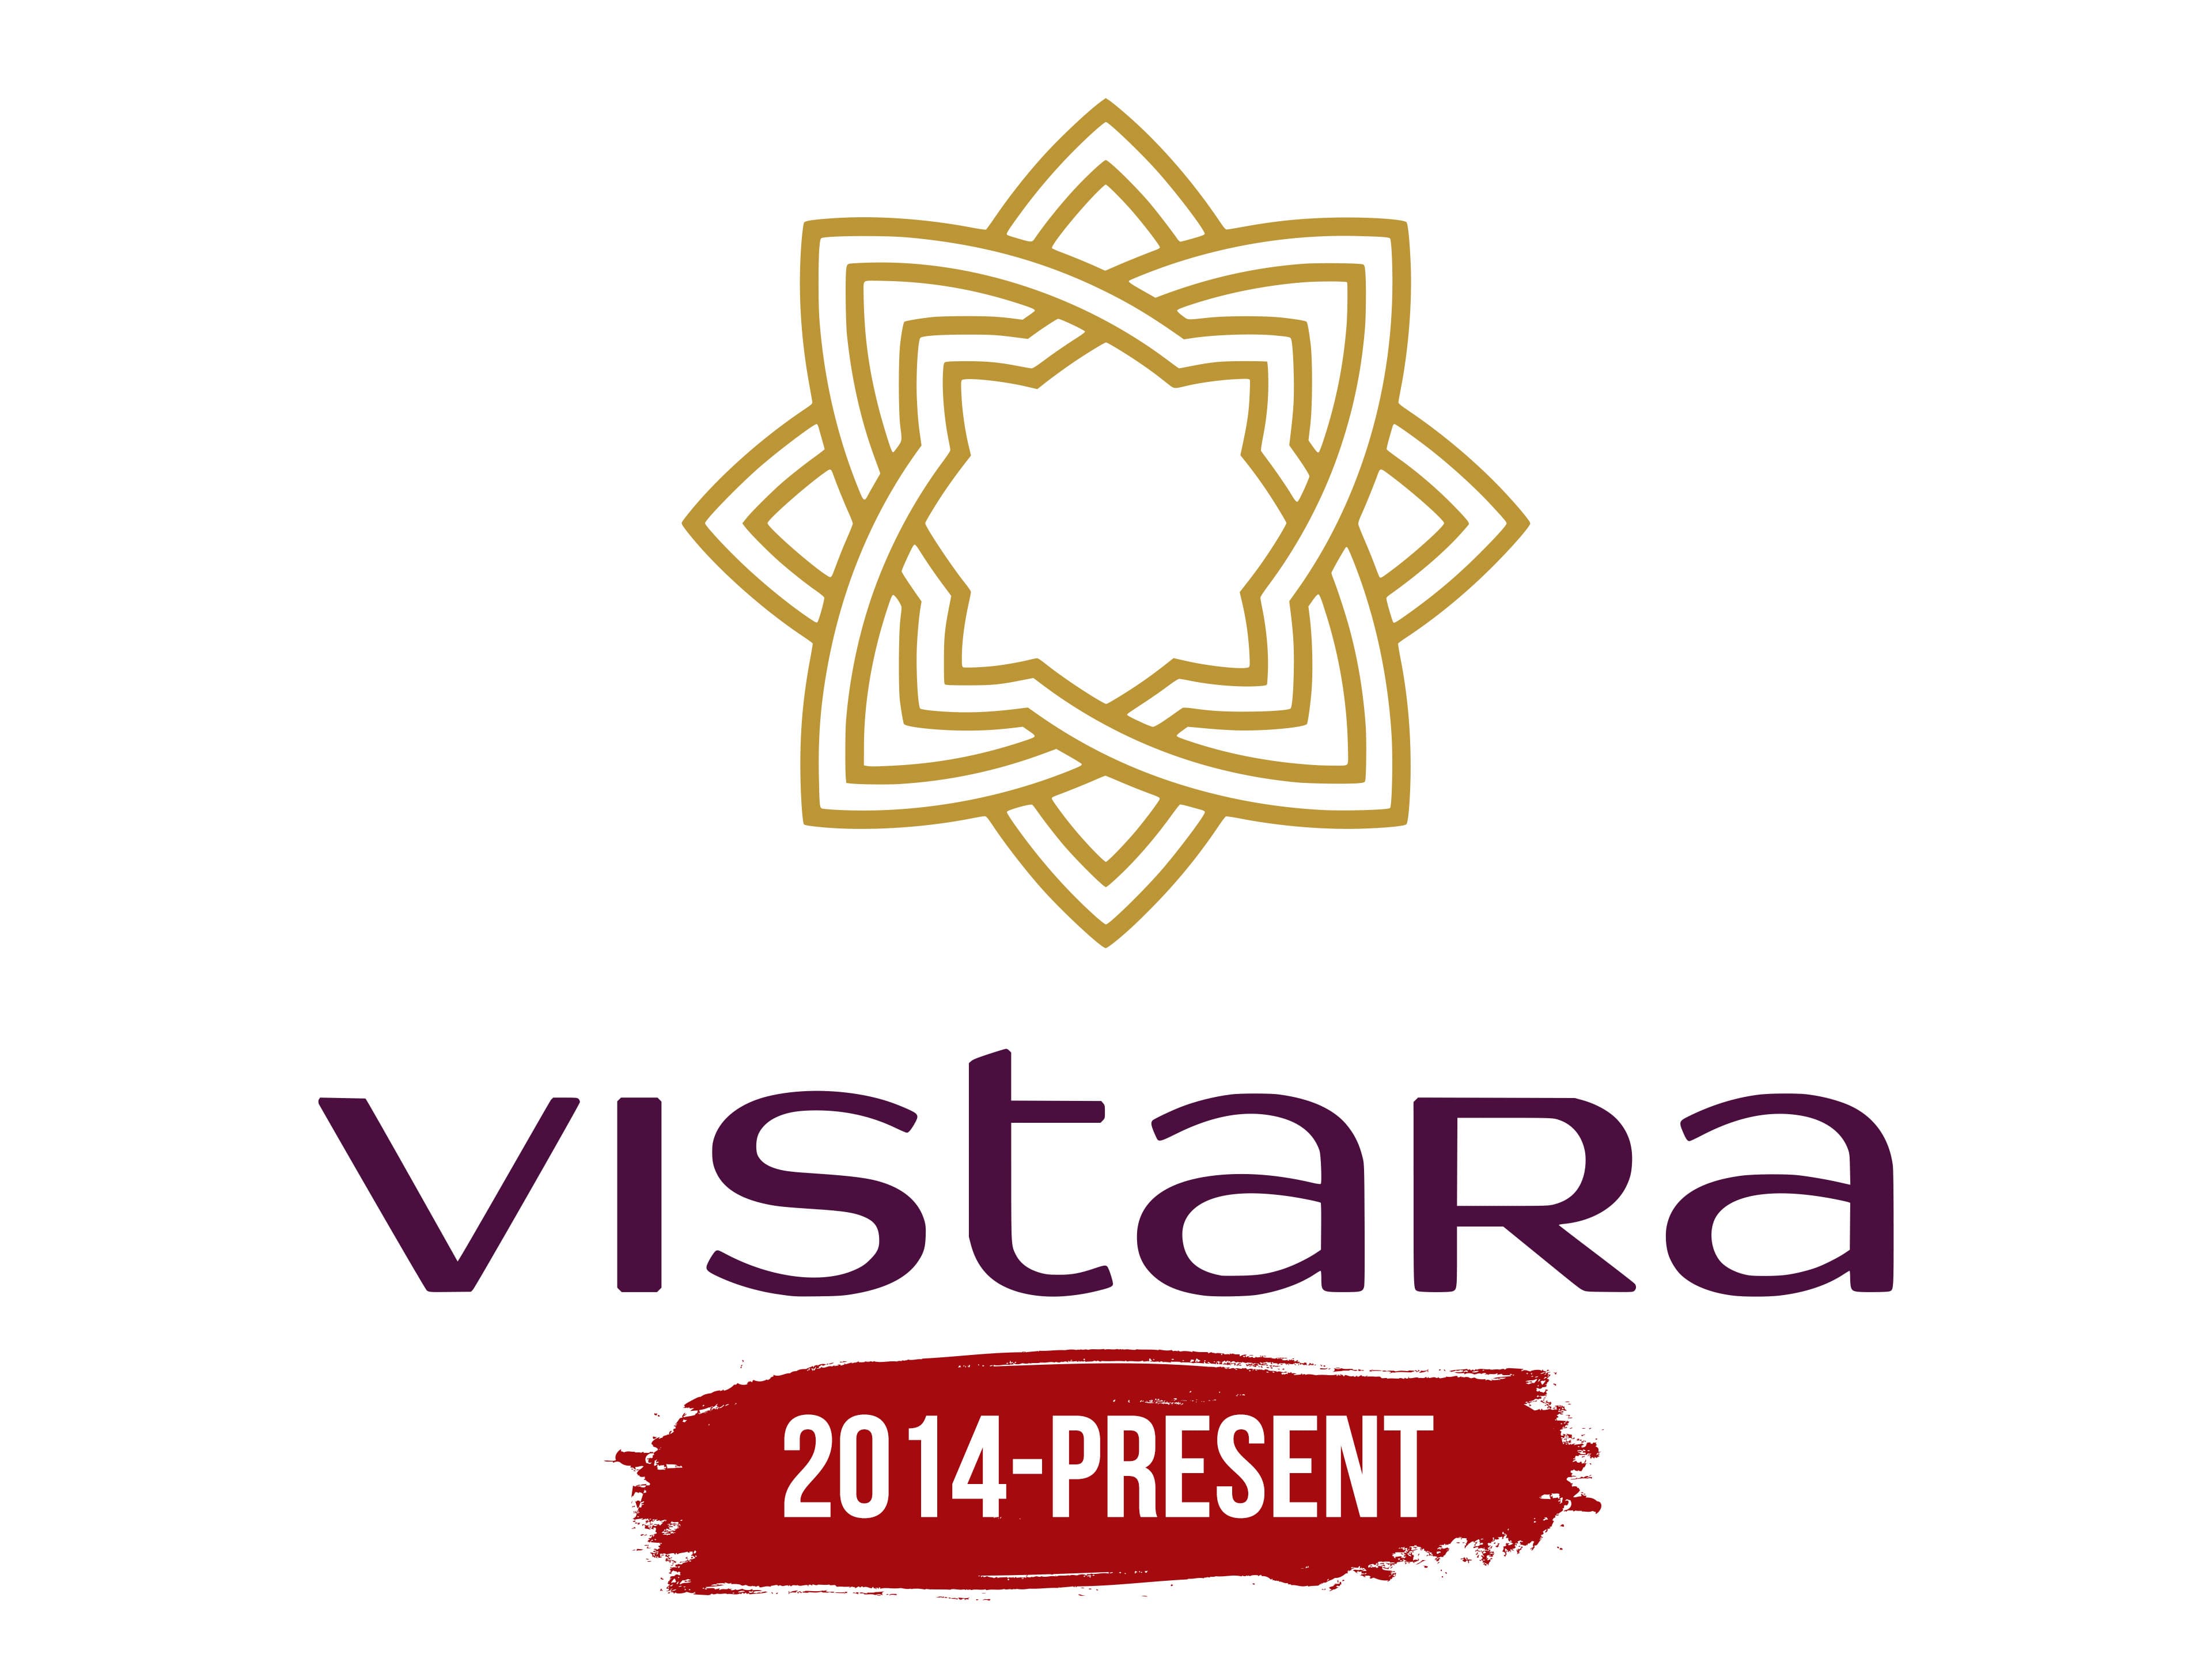 Vistara - TATA SIA Airlines Ltd. on LinkedIn: We are hiring! | 49 comments